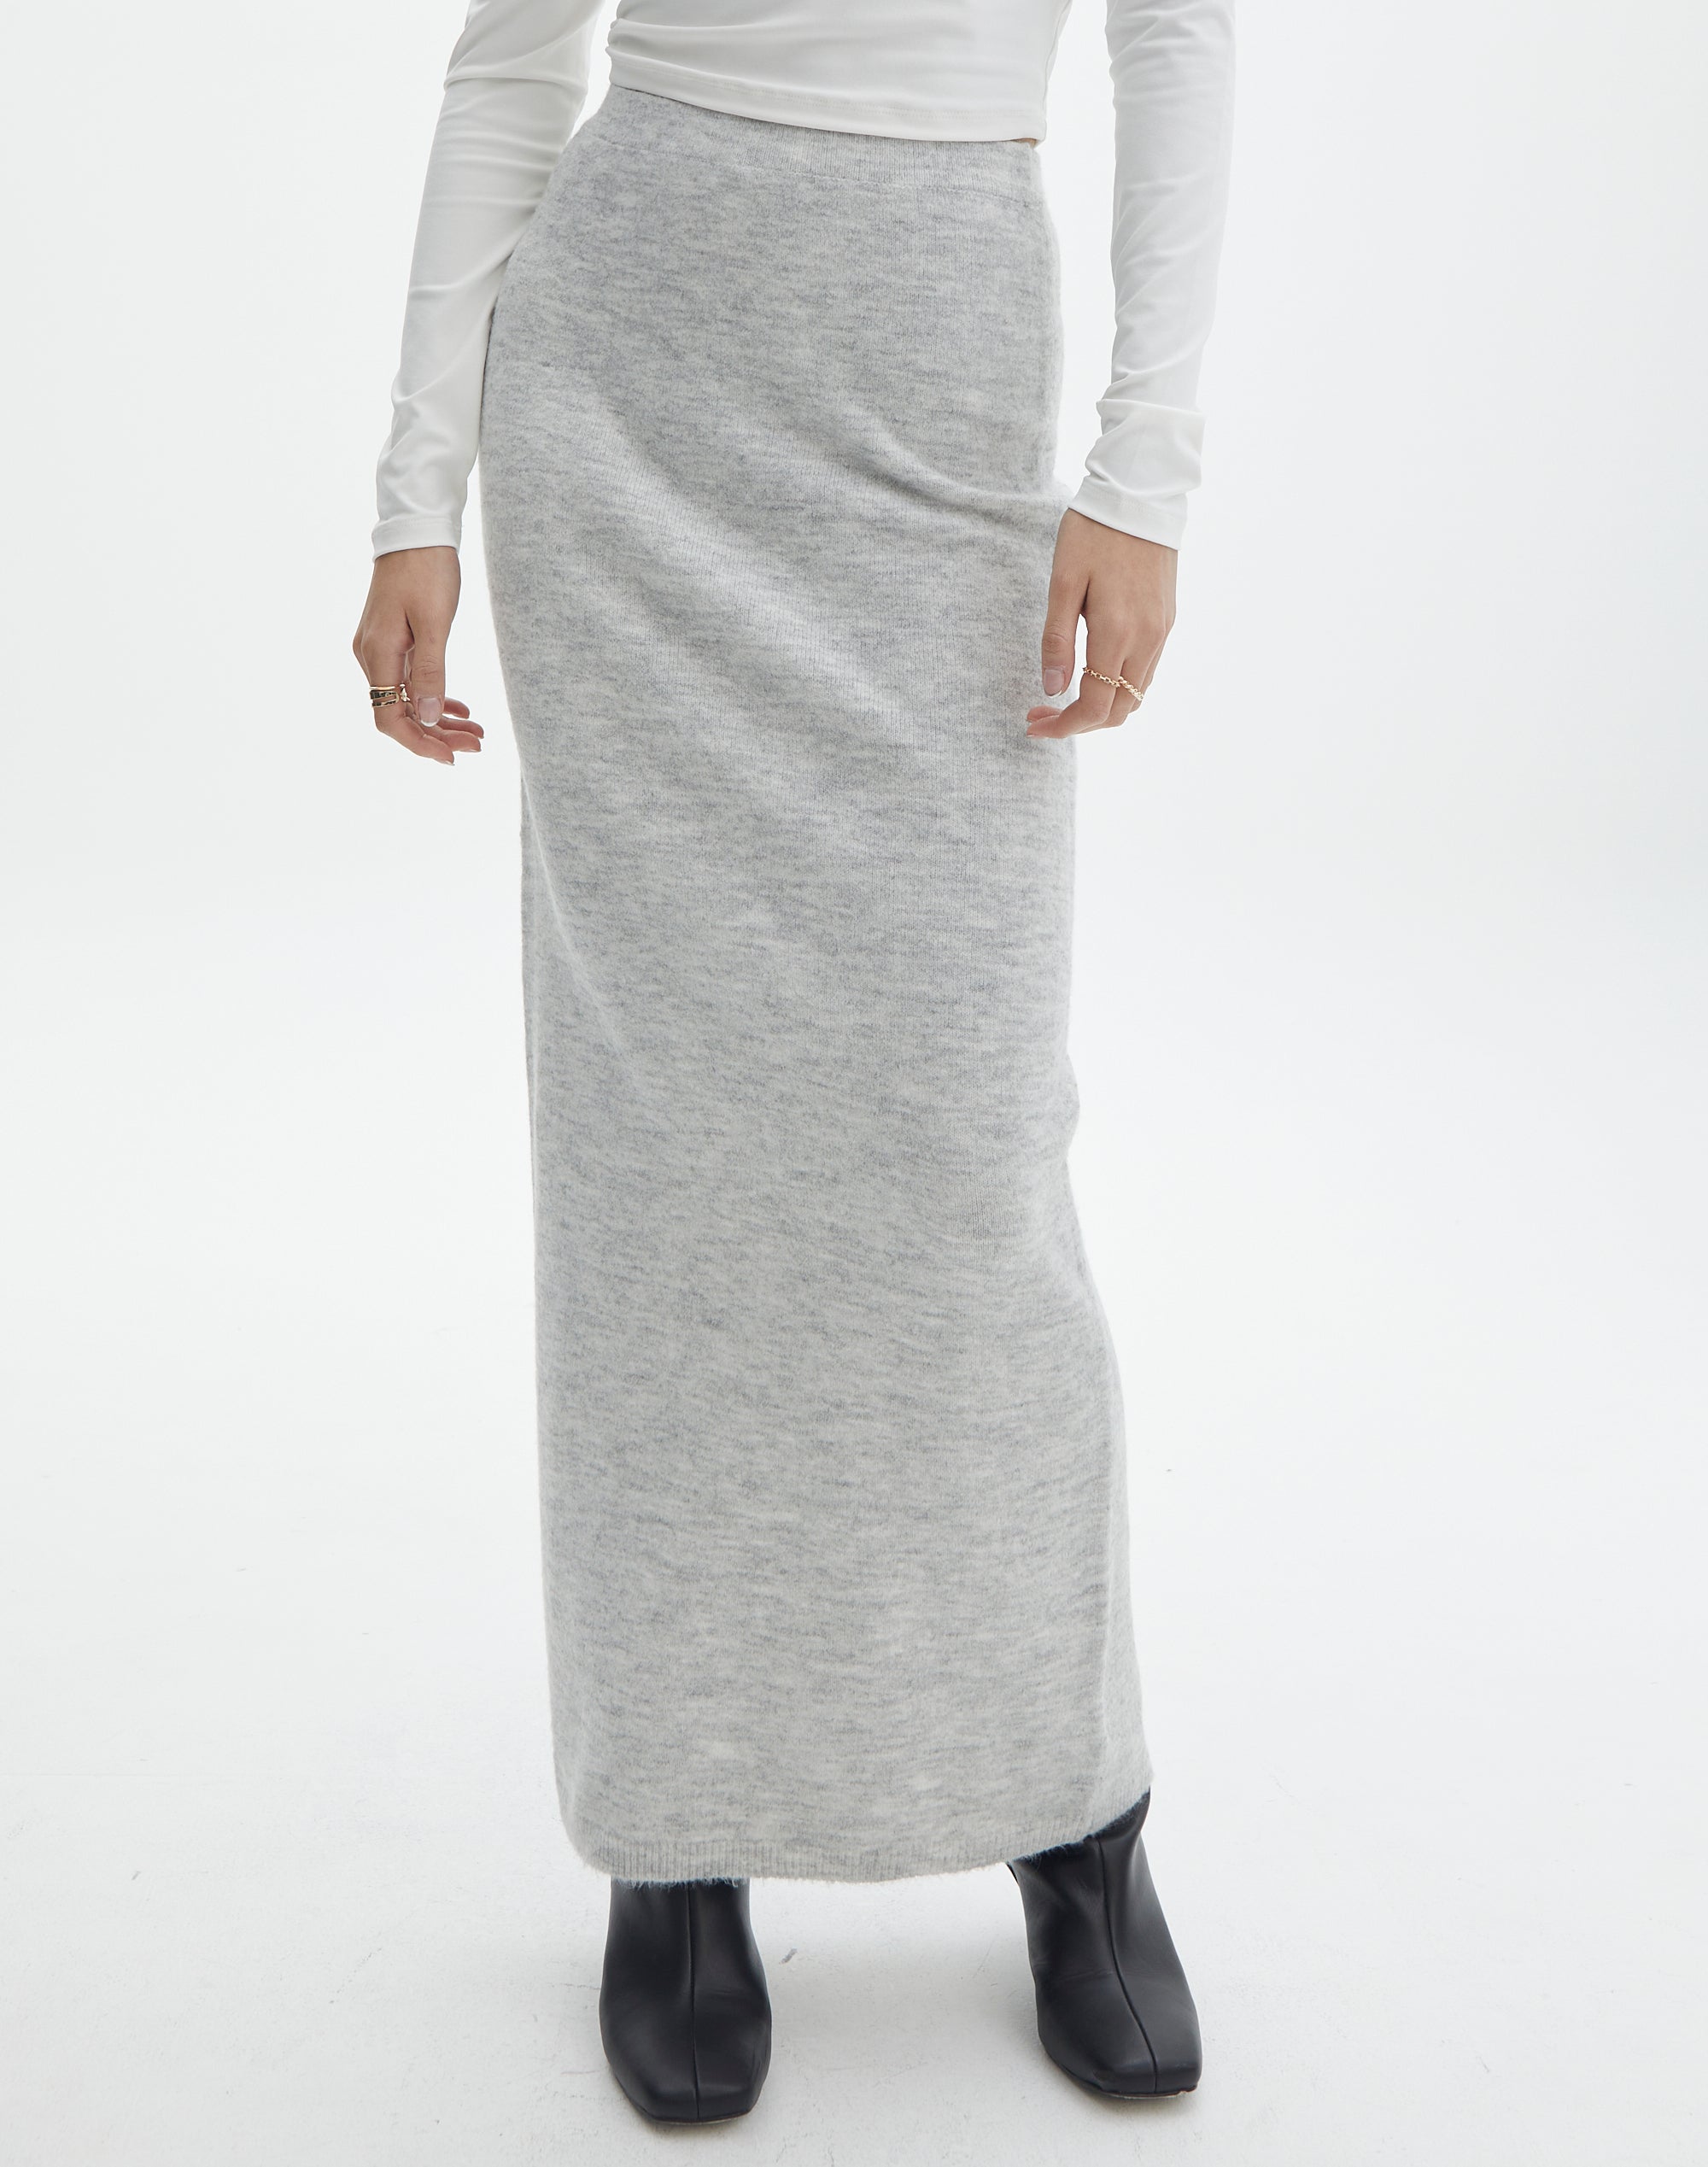 Fluffy Knit Maxi Skirt in Grey Marle